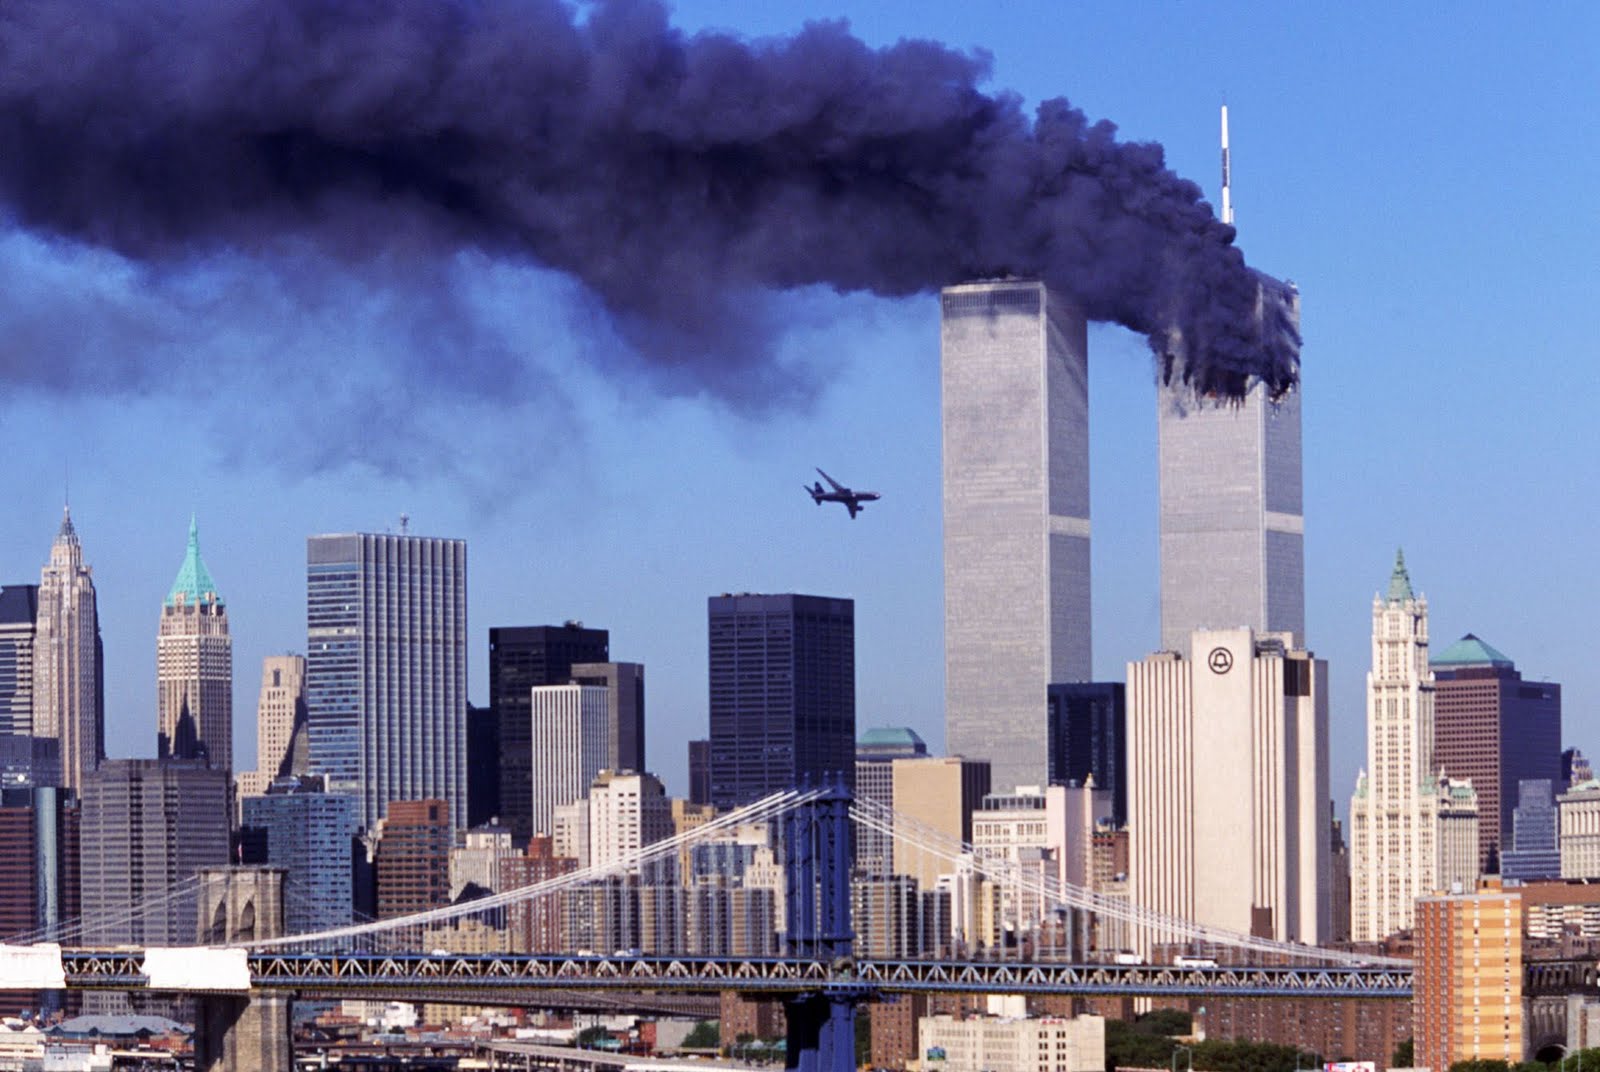  airplane crashes to the World Trade Center New York 11 Sept 2001